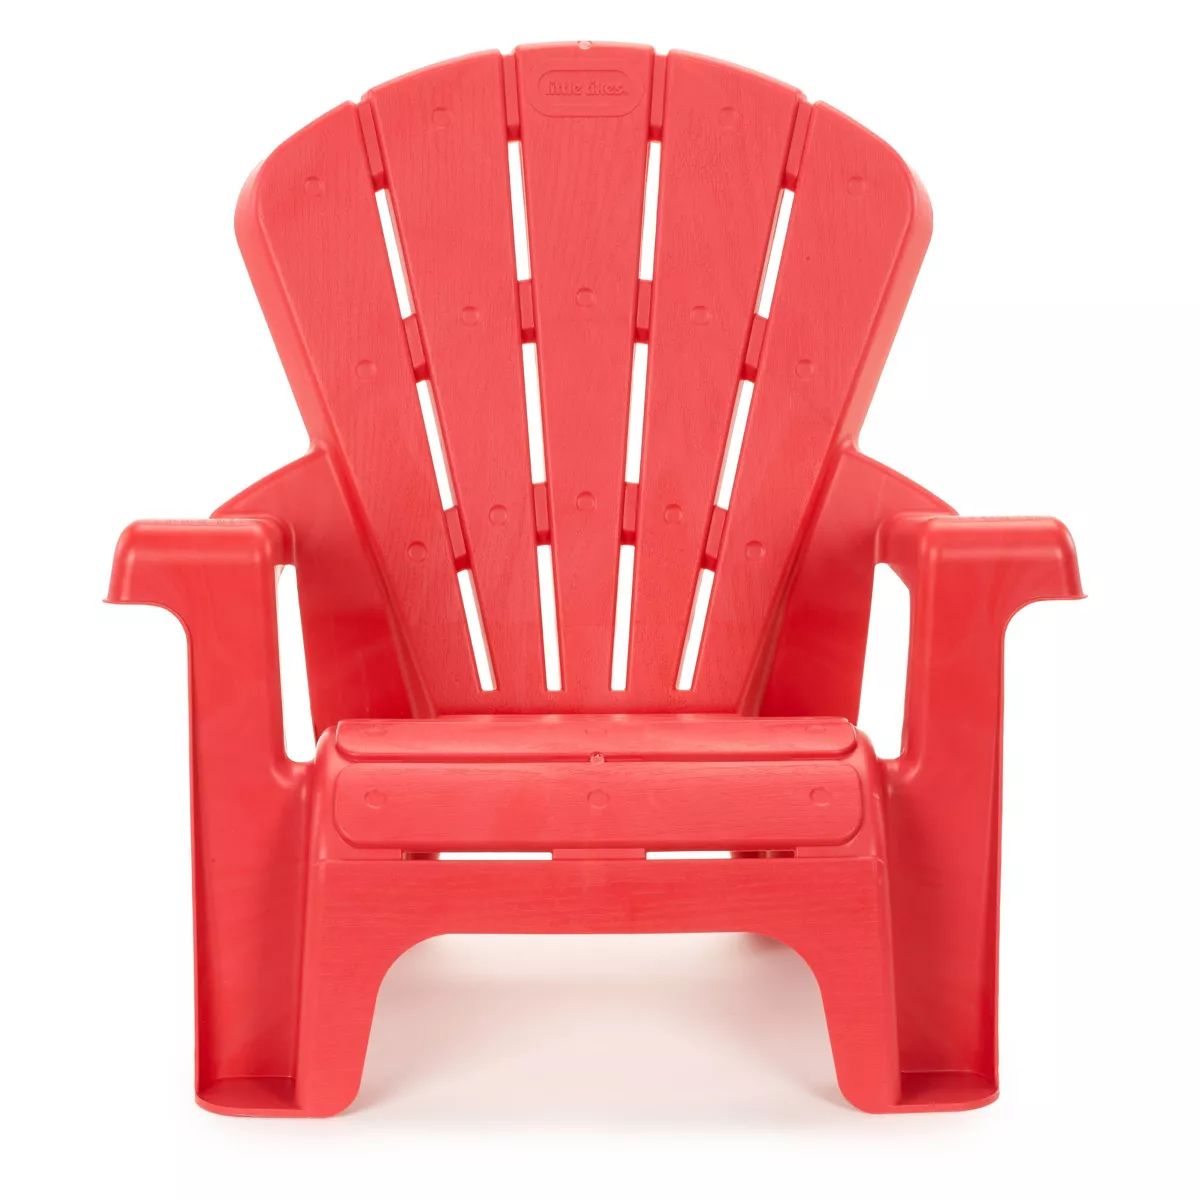 Little Tikes Garden Outdoor Portable Chair - Red | Target